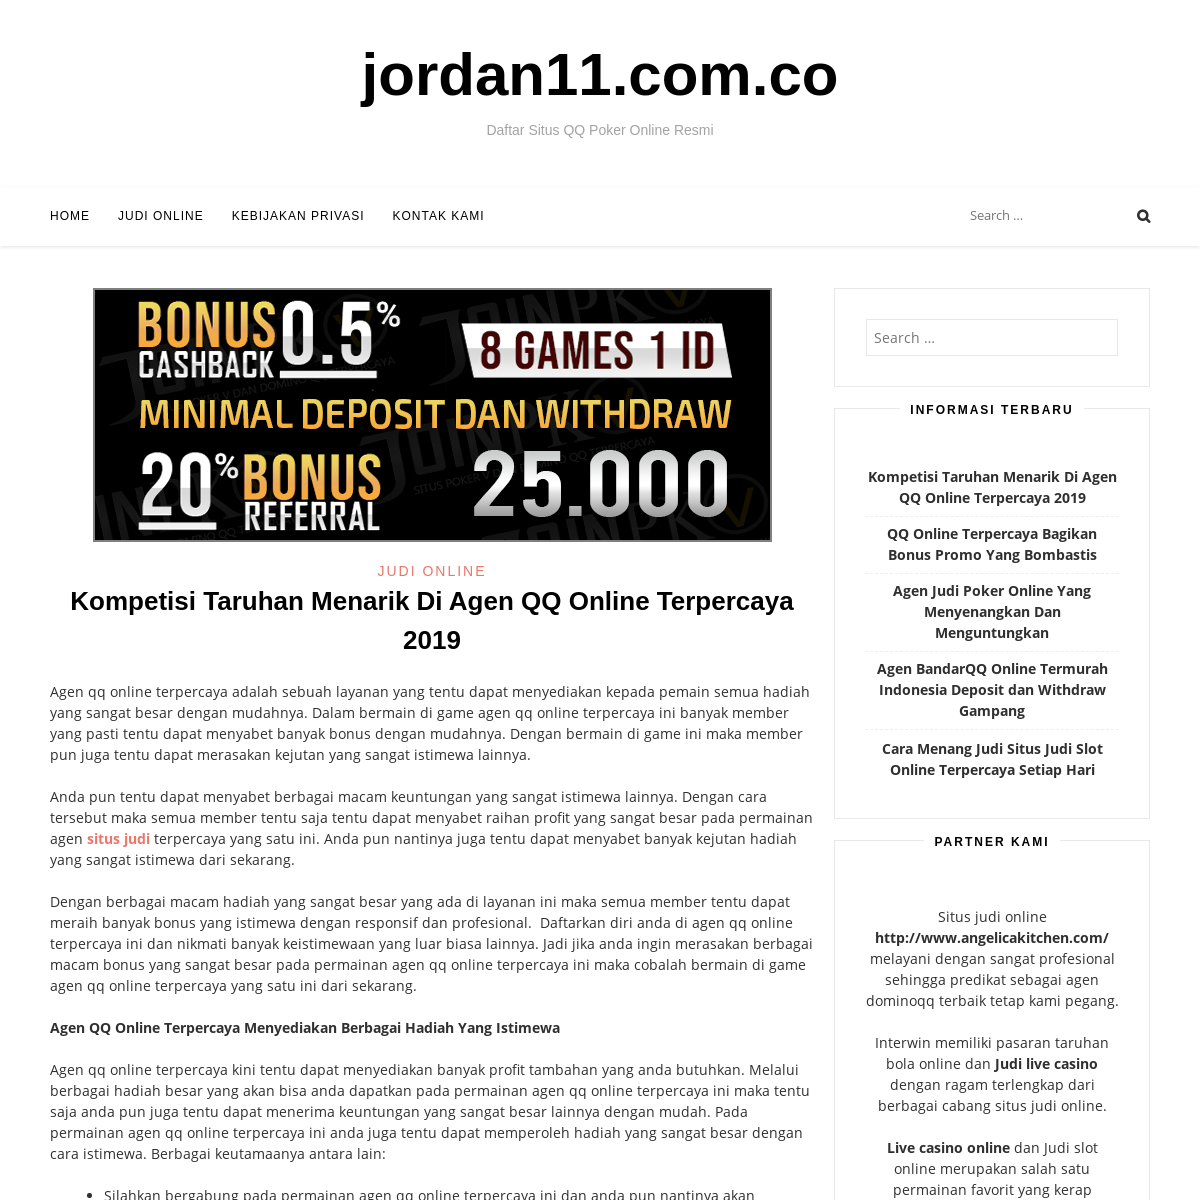 A complete backup of jordan11.com.co